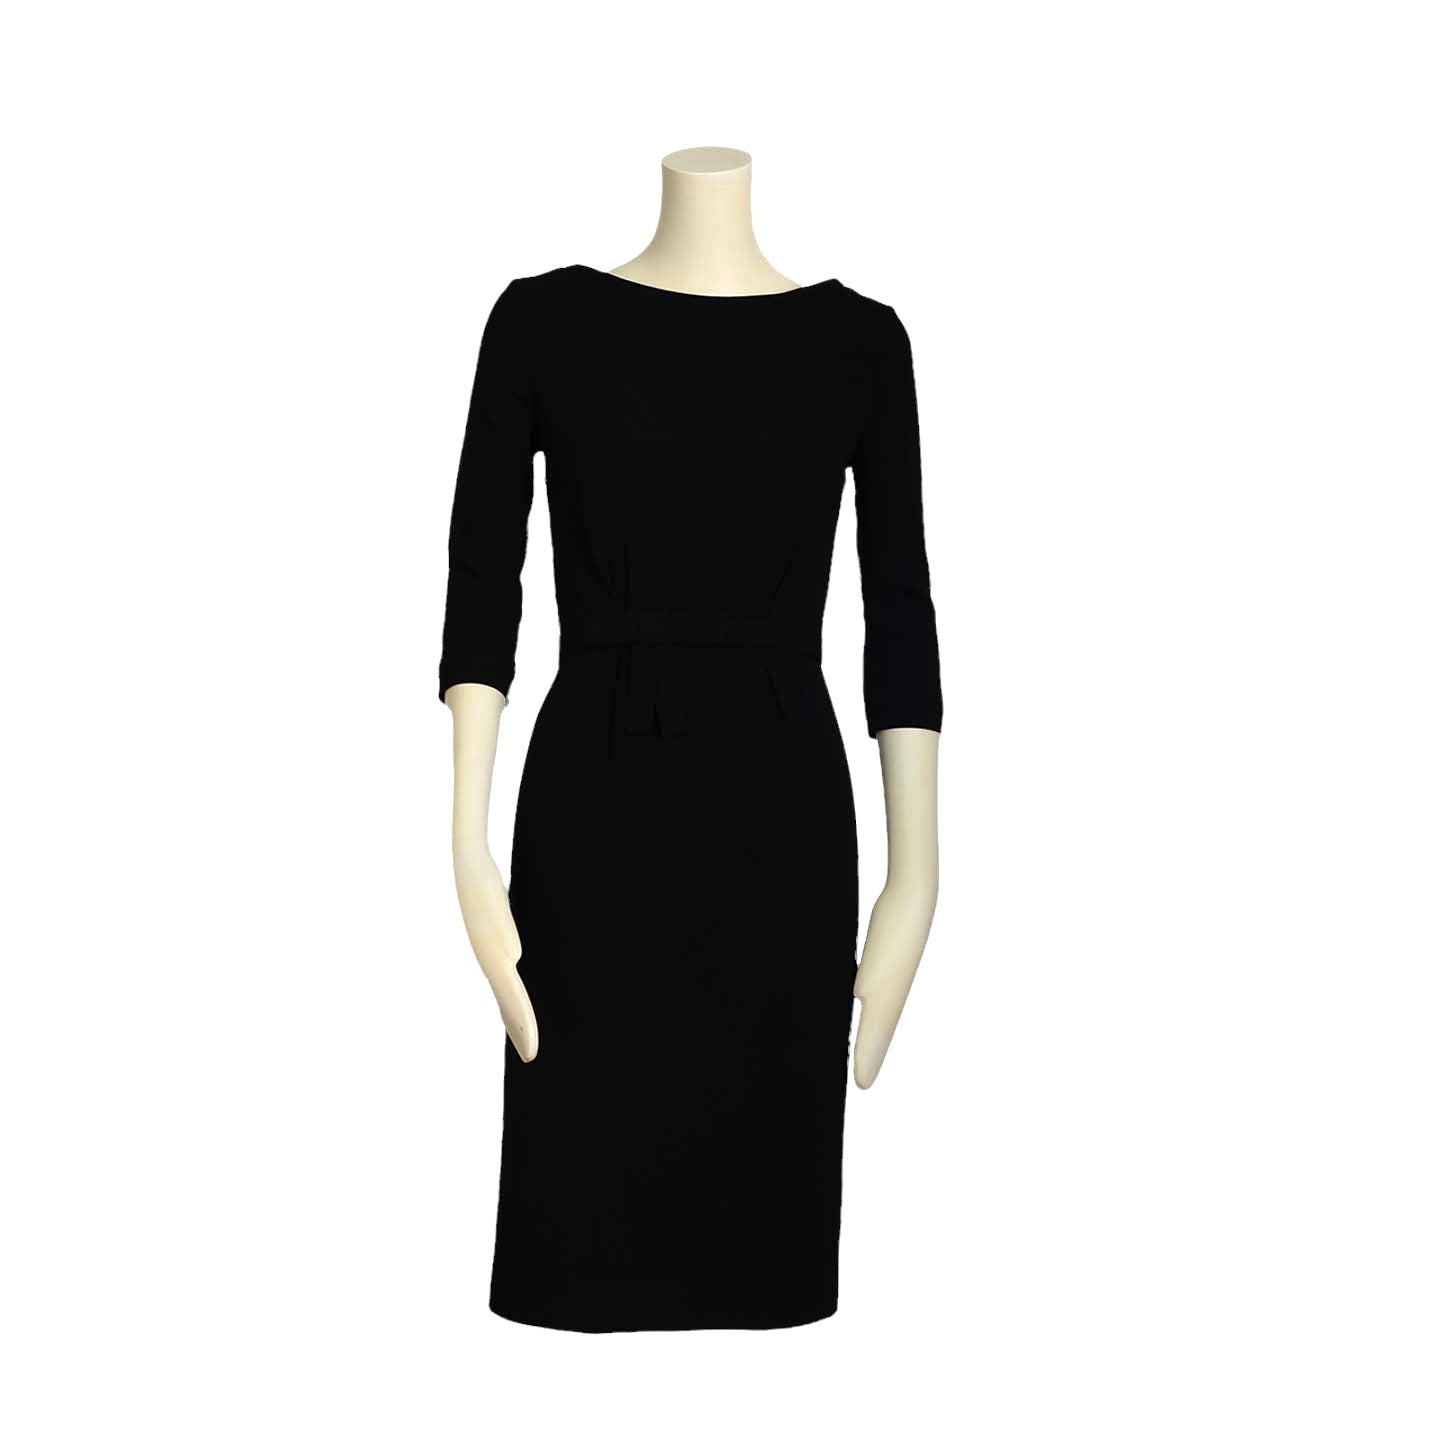 Christian Dior Boutique black dress - S - 2010s